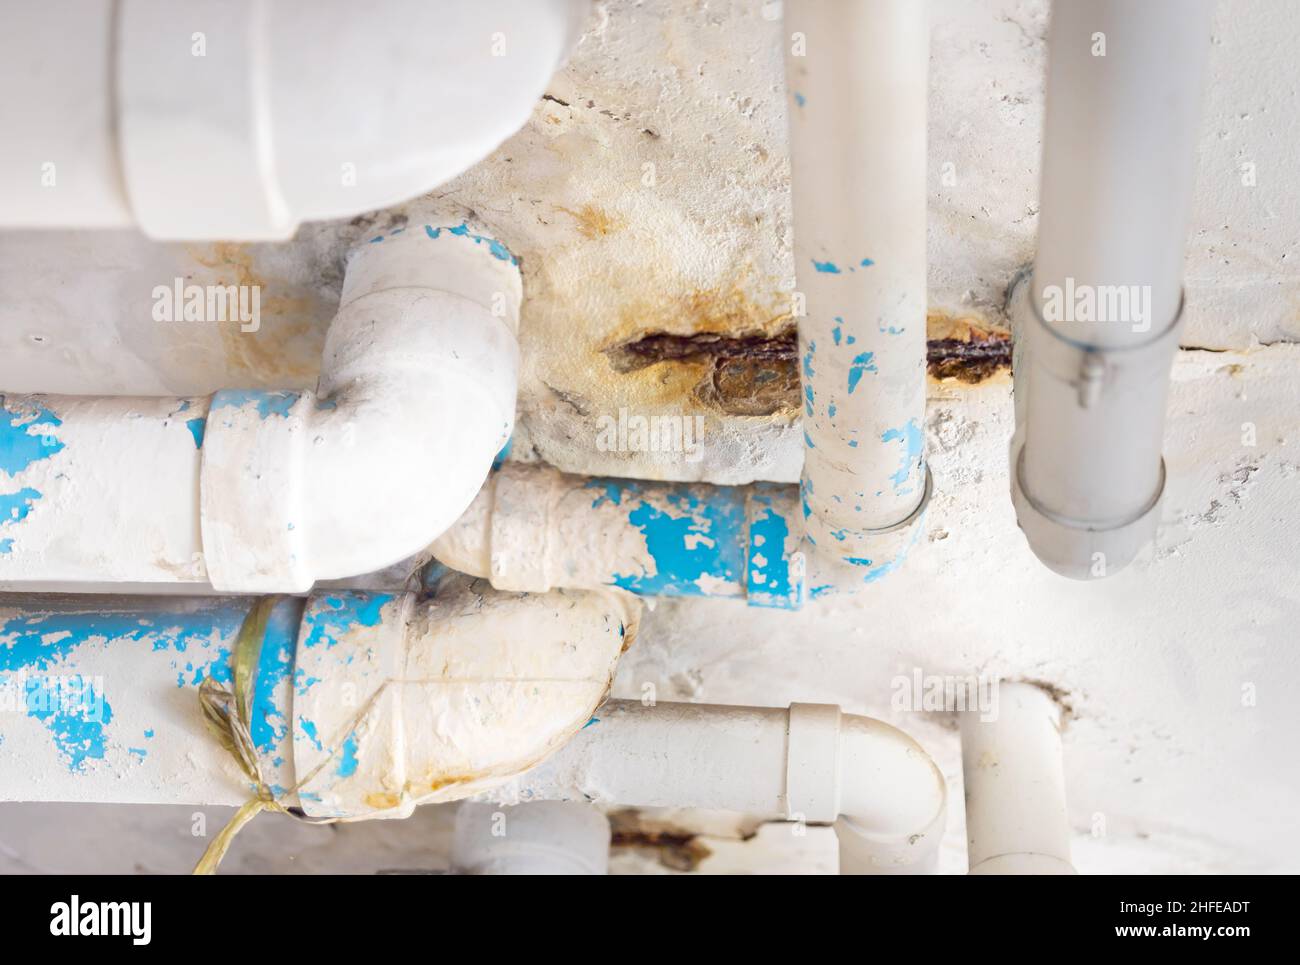 Beschädigte PVC-Wasserleitung Leck, Gebäude Drainagerohre Riss sickert Problem zu beheben Stockfoto